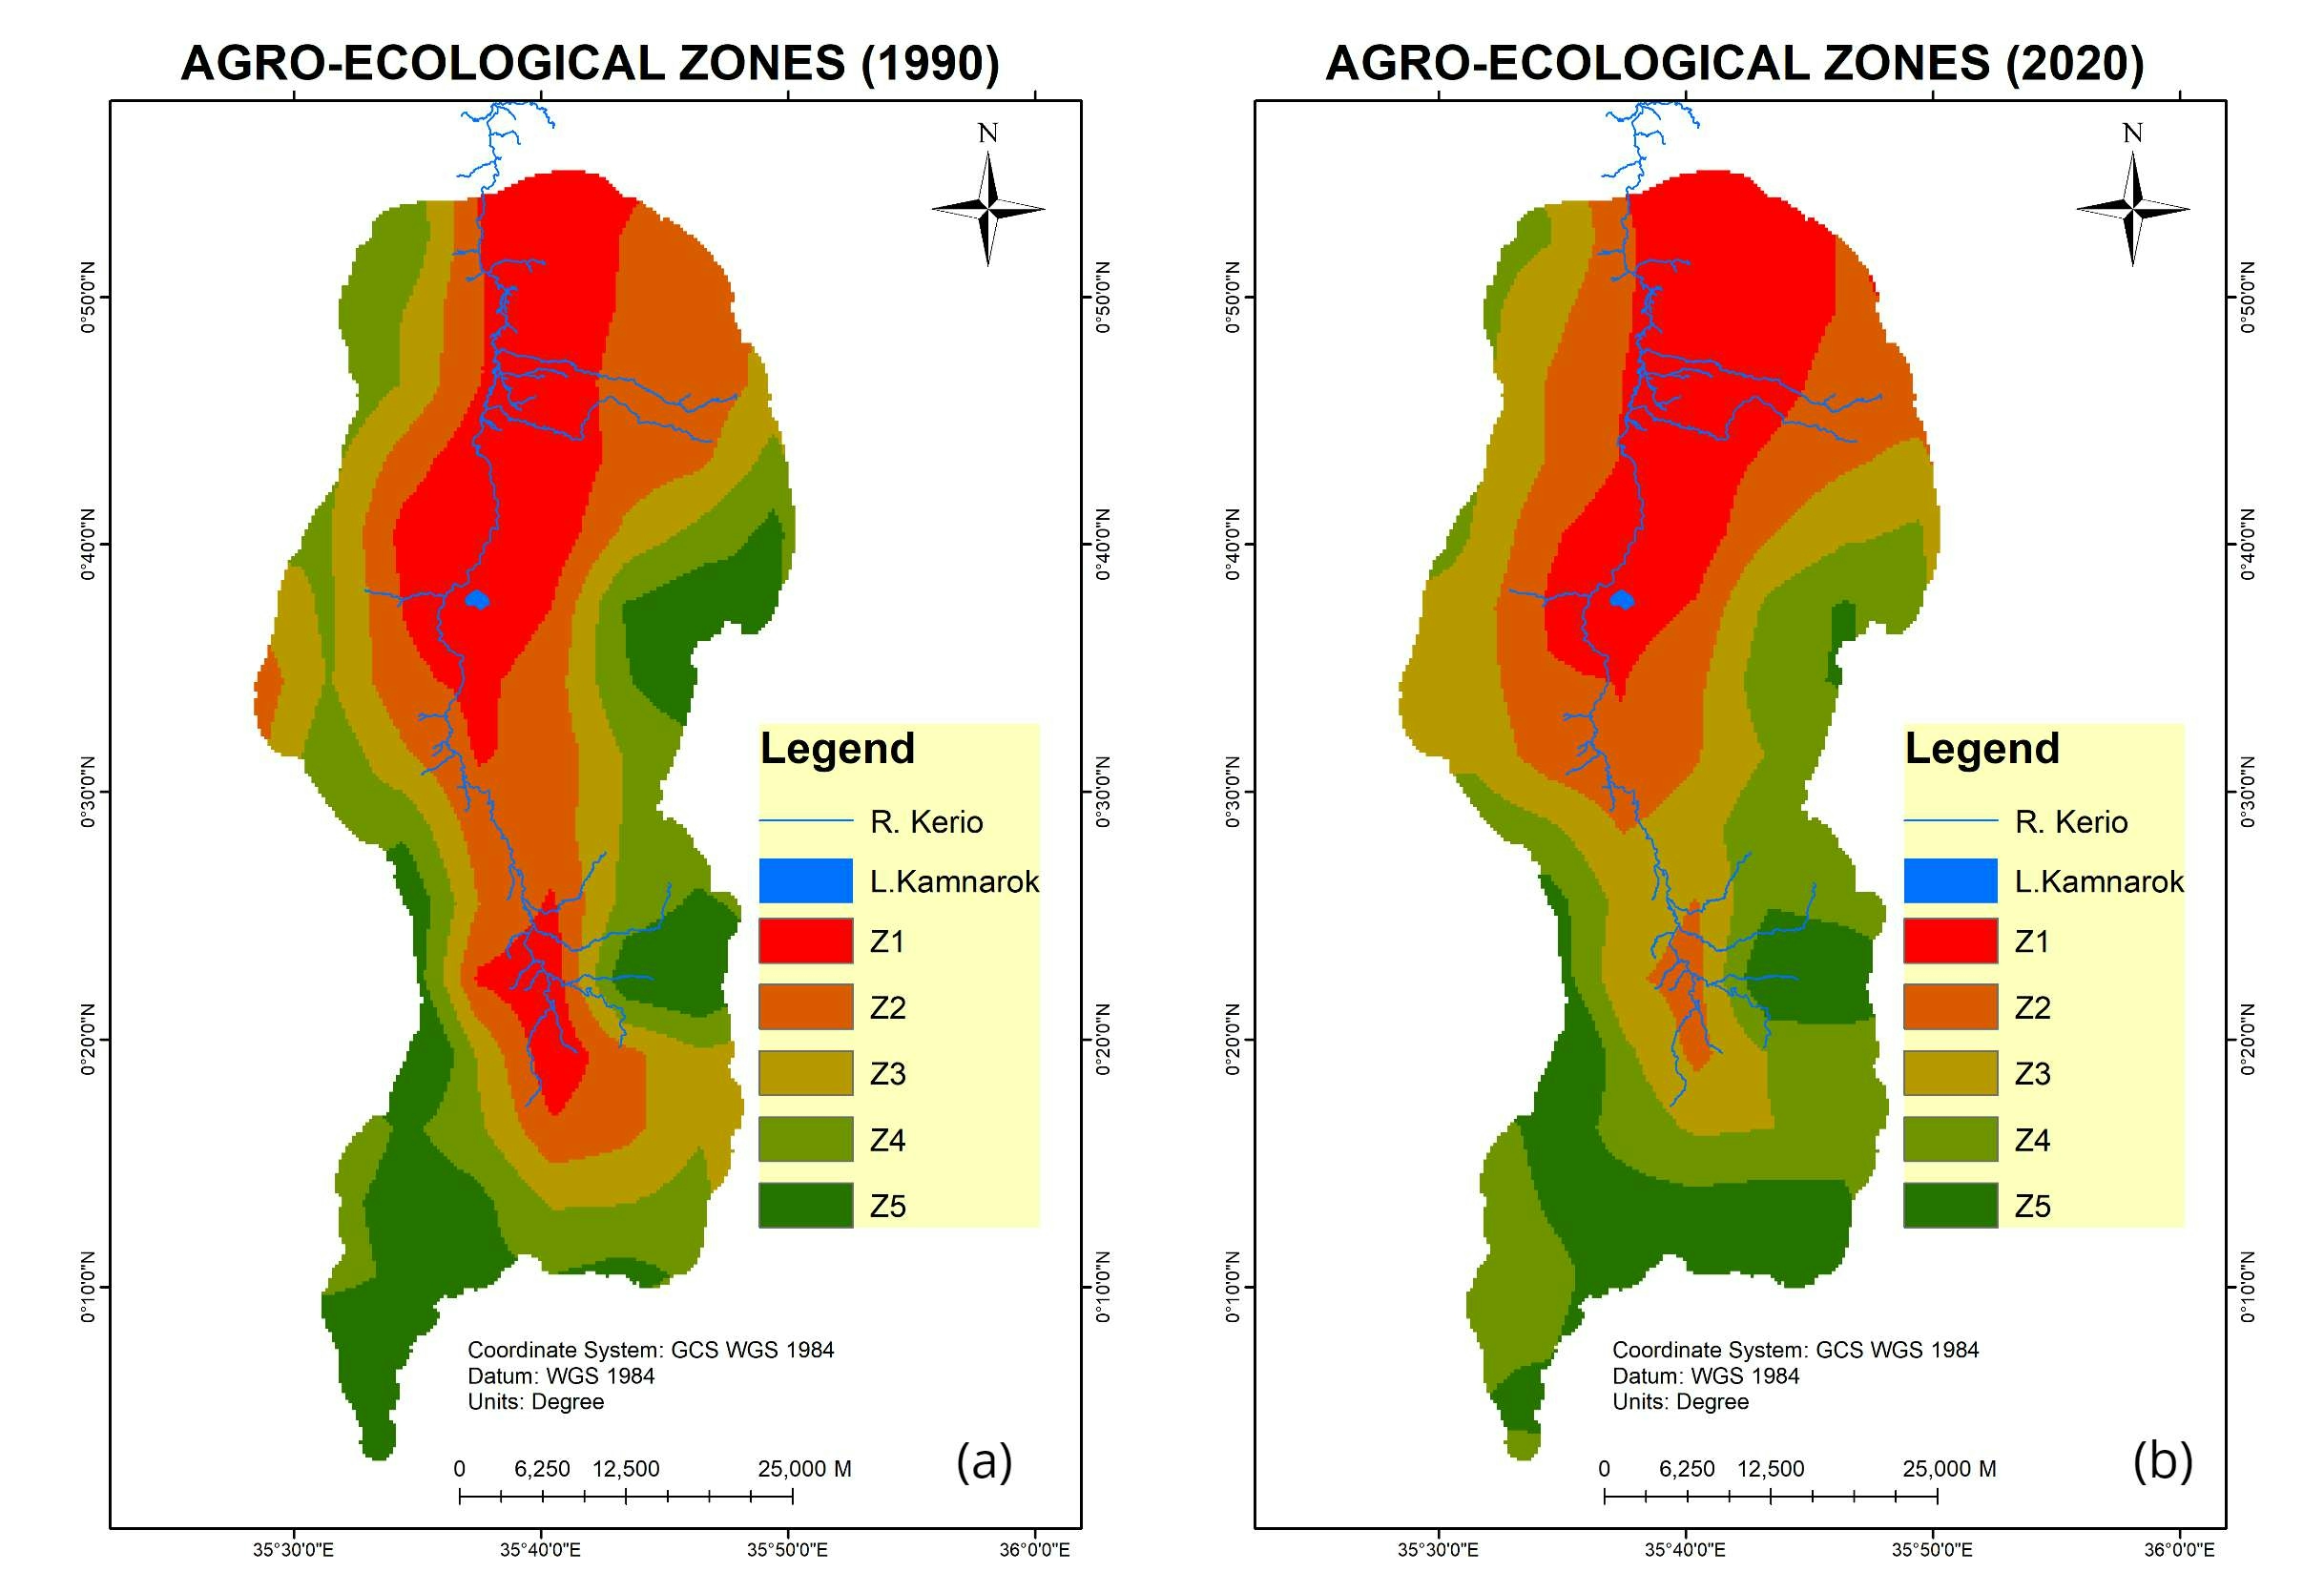 KERIO VALLEY AGROECOLOGICAL ZONES, Kenya